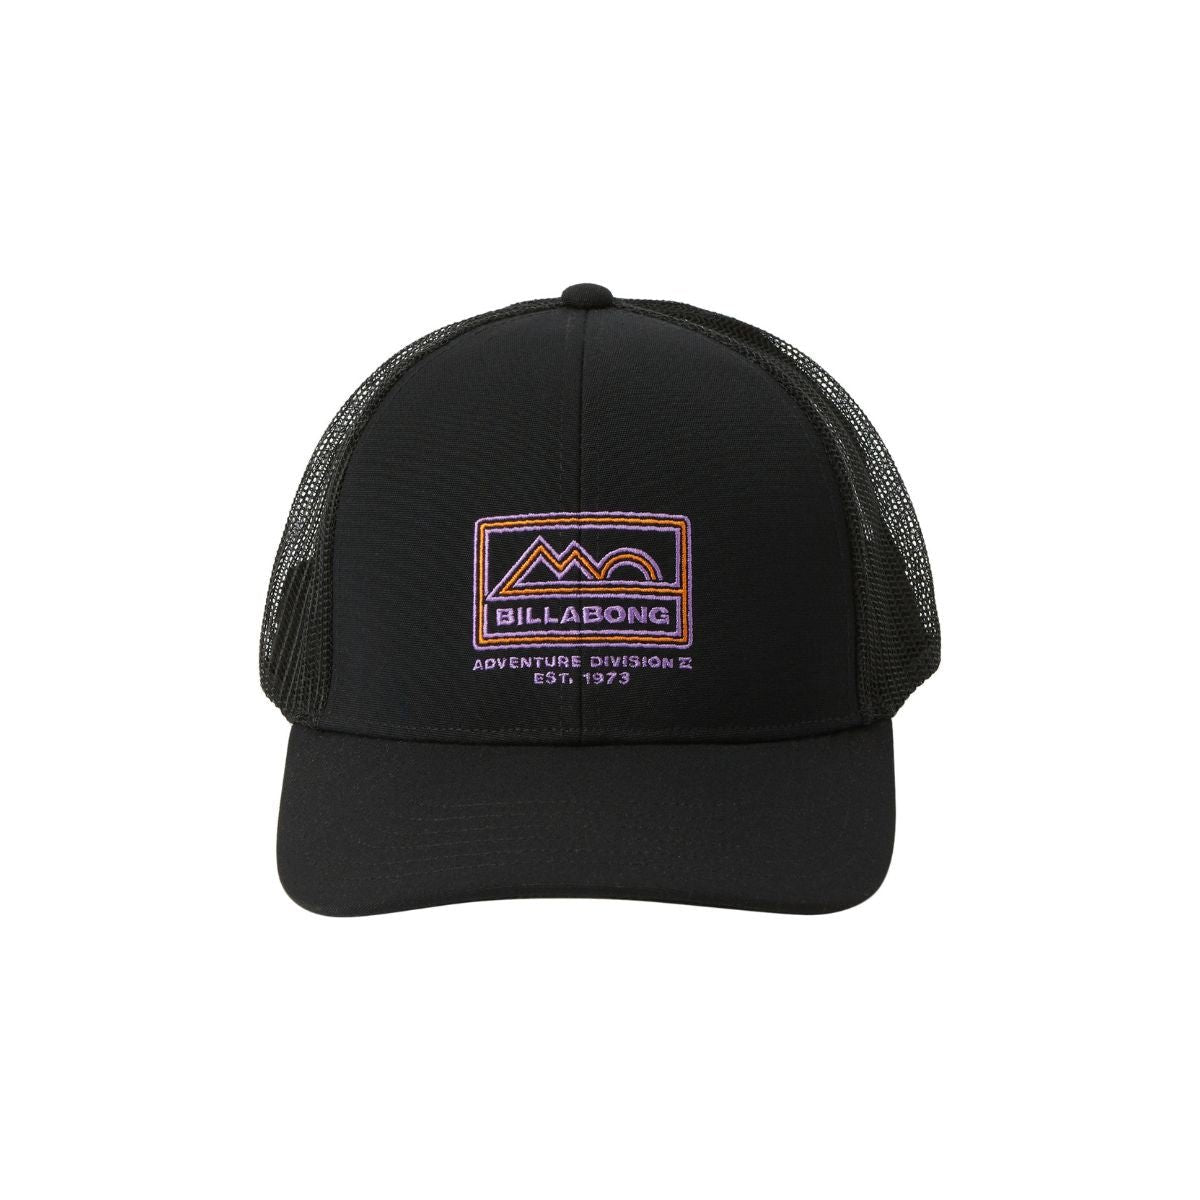 Billabong A/Div Walled Trucker Hat in Black